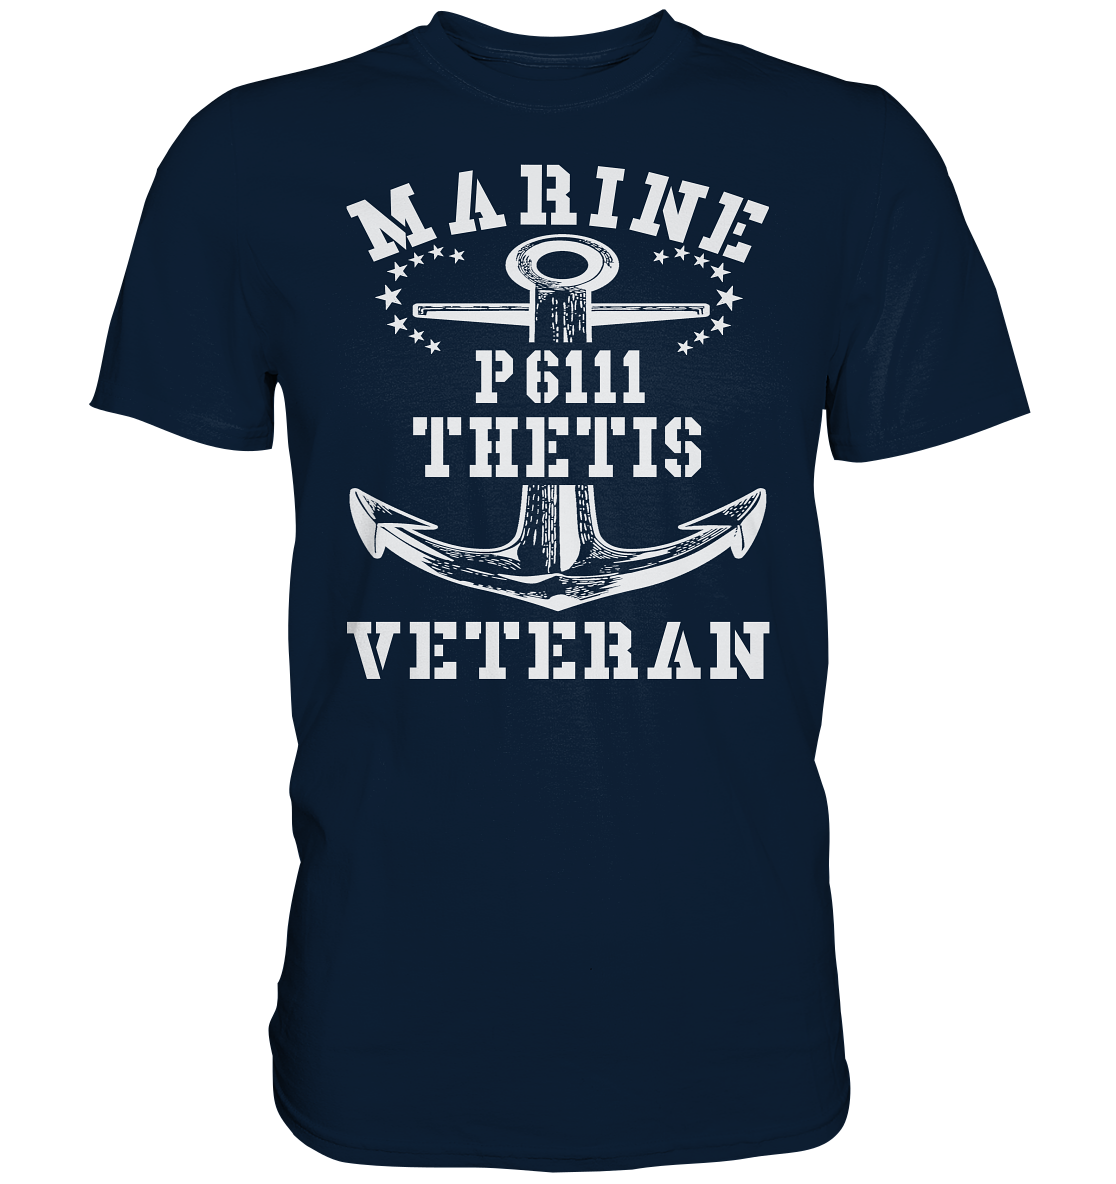 U-Jagdboot P6111 THETIS Marine Veteran - Premium Shirt